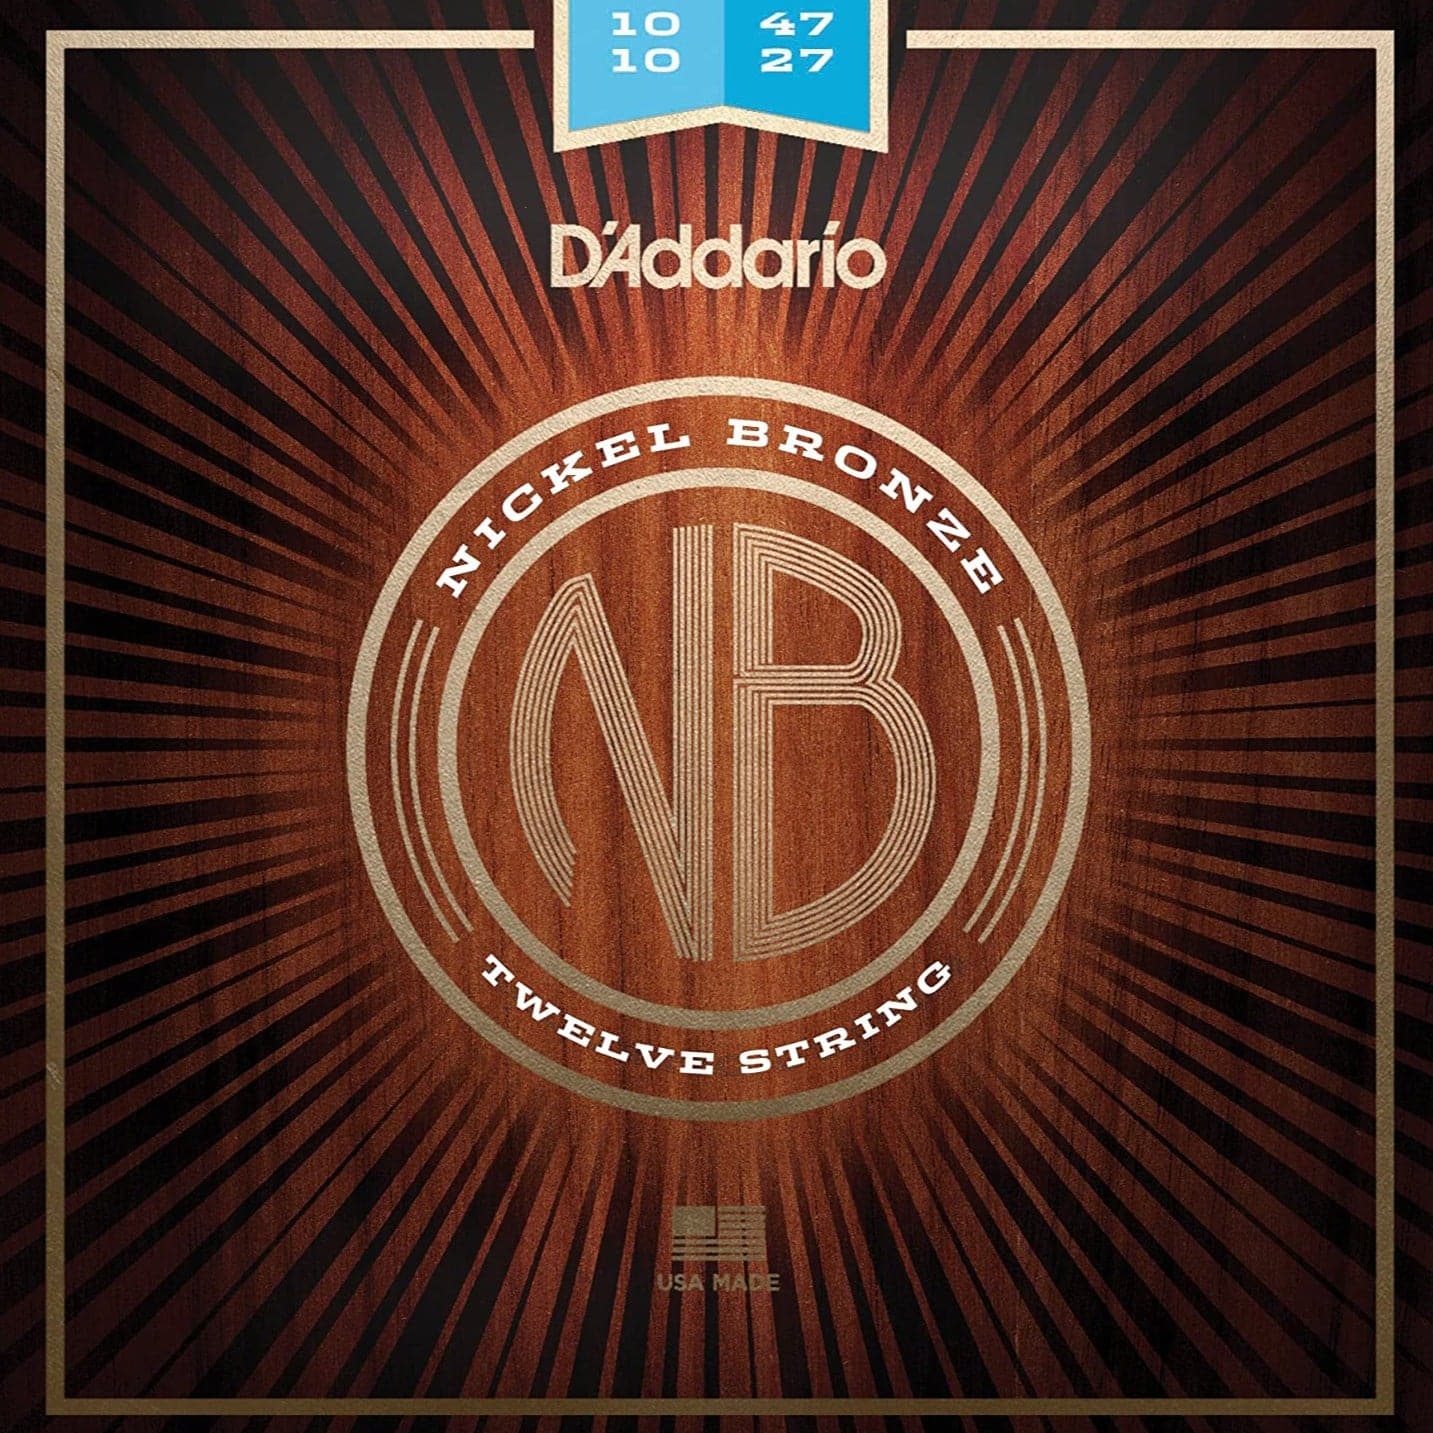 D'Addario NB1047-12 Nickel Bronze 12 String Acoustic Guitar Strings - Extra Light - 10-47